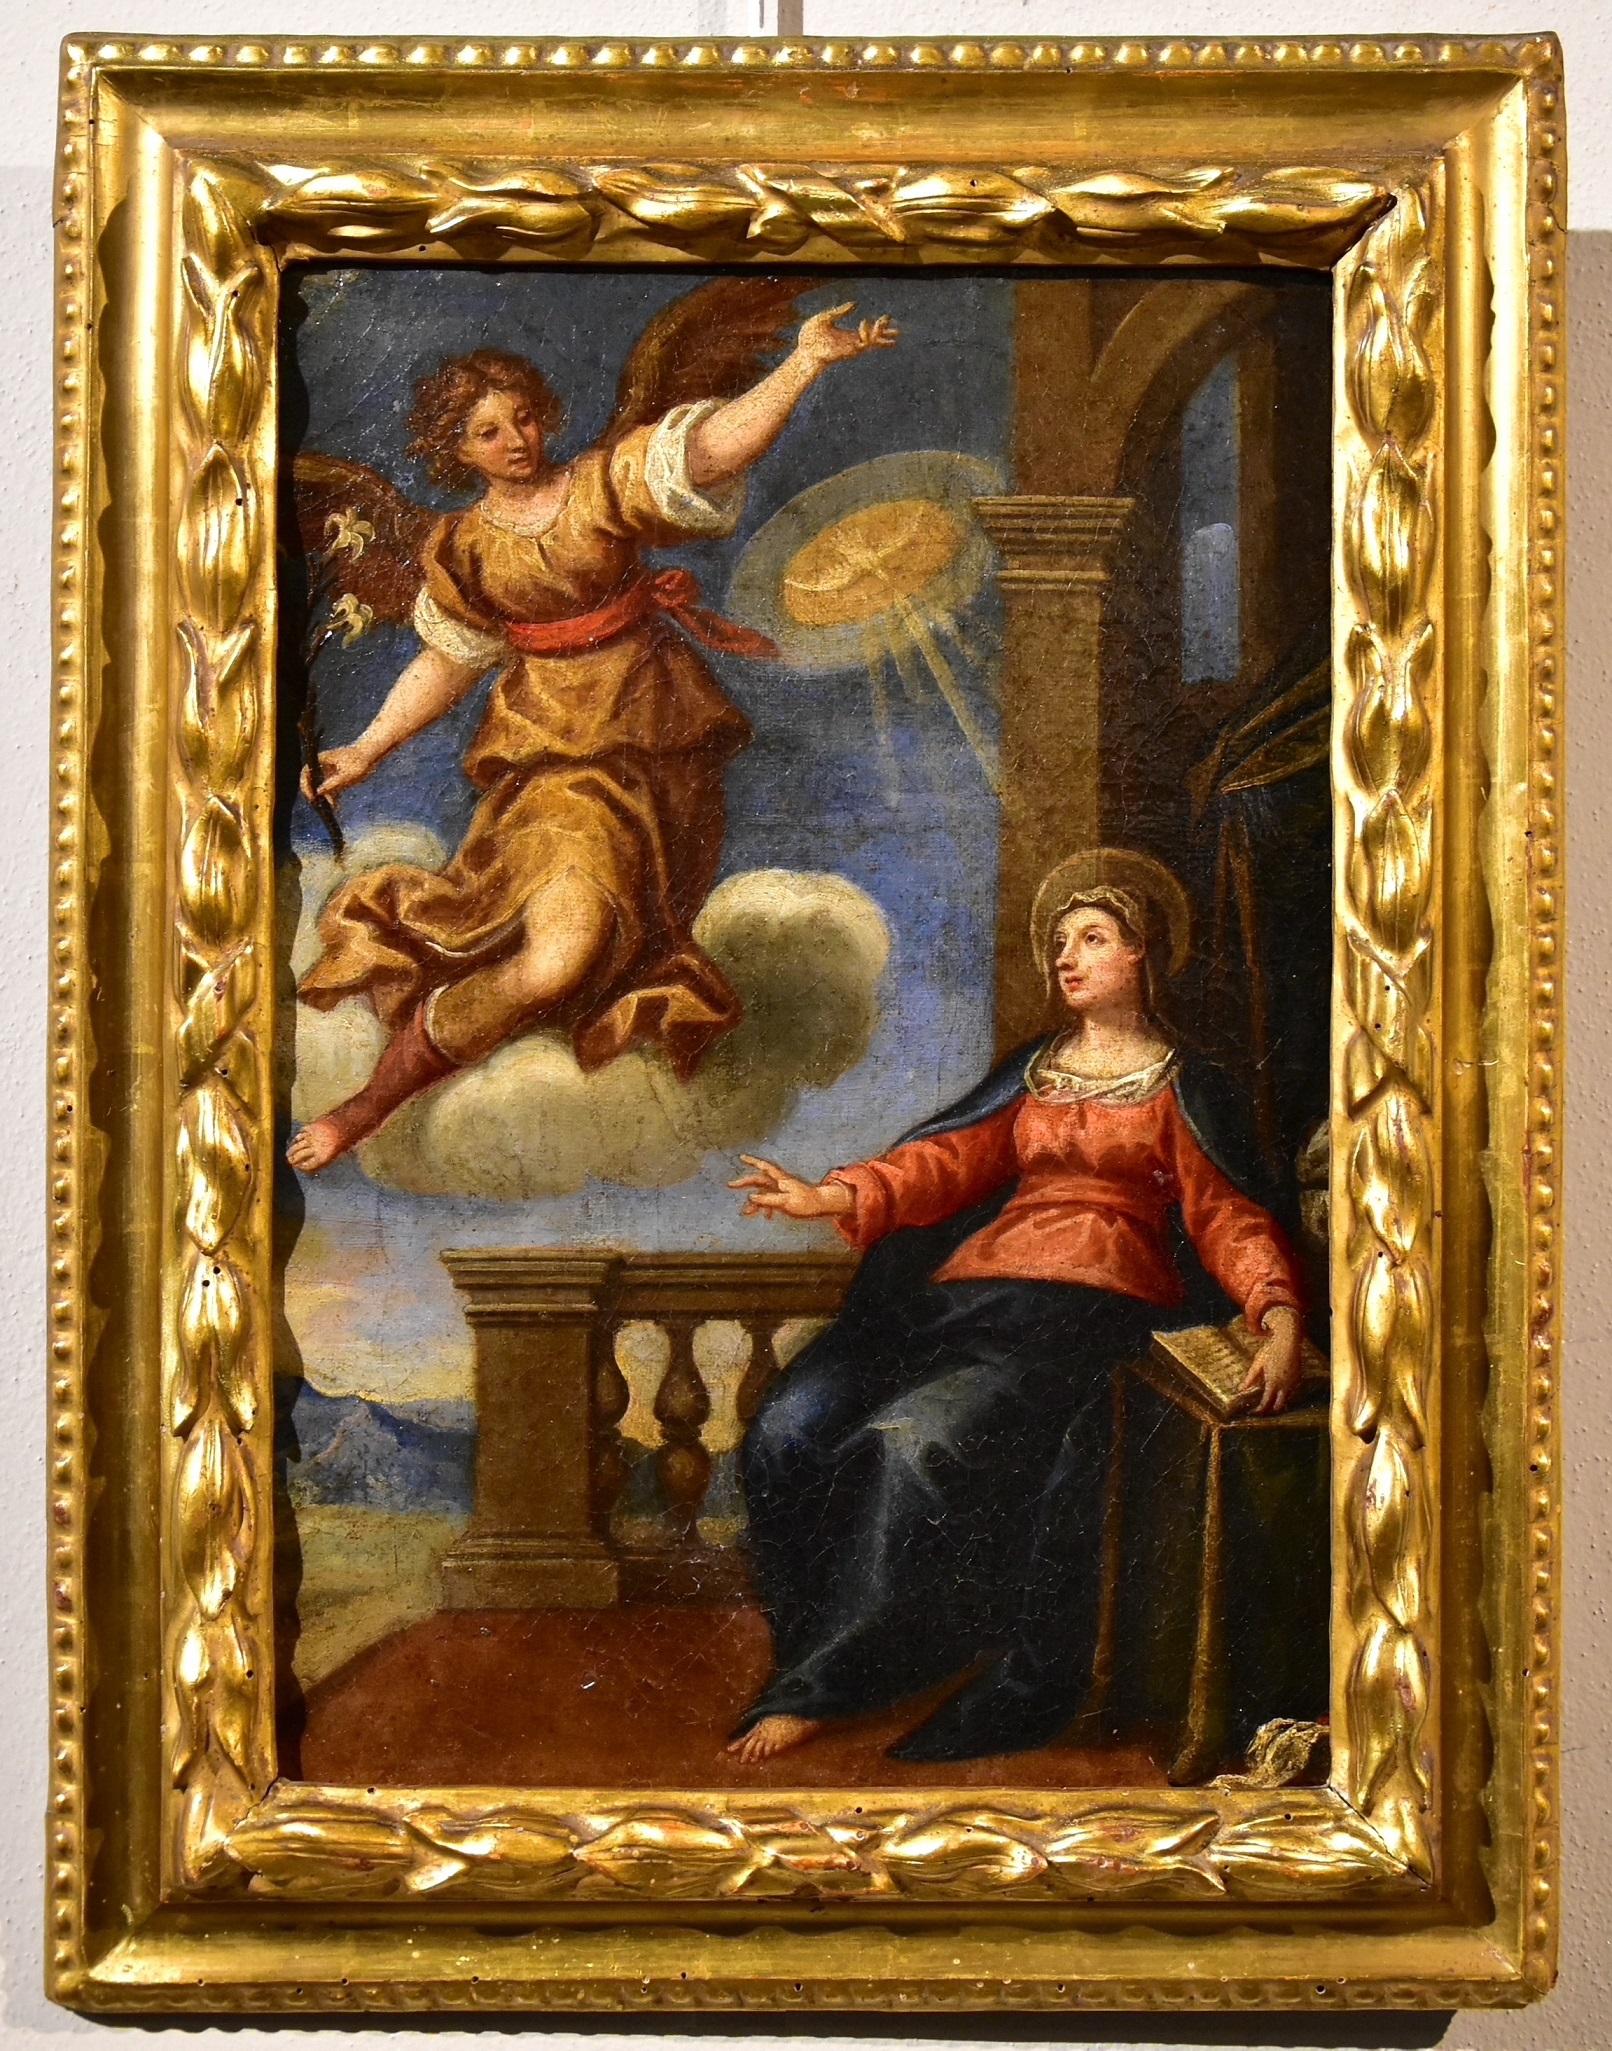 Annunciation Oil on canvas Old master 17th Century Italian Religious Paint Art